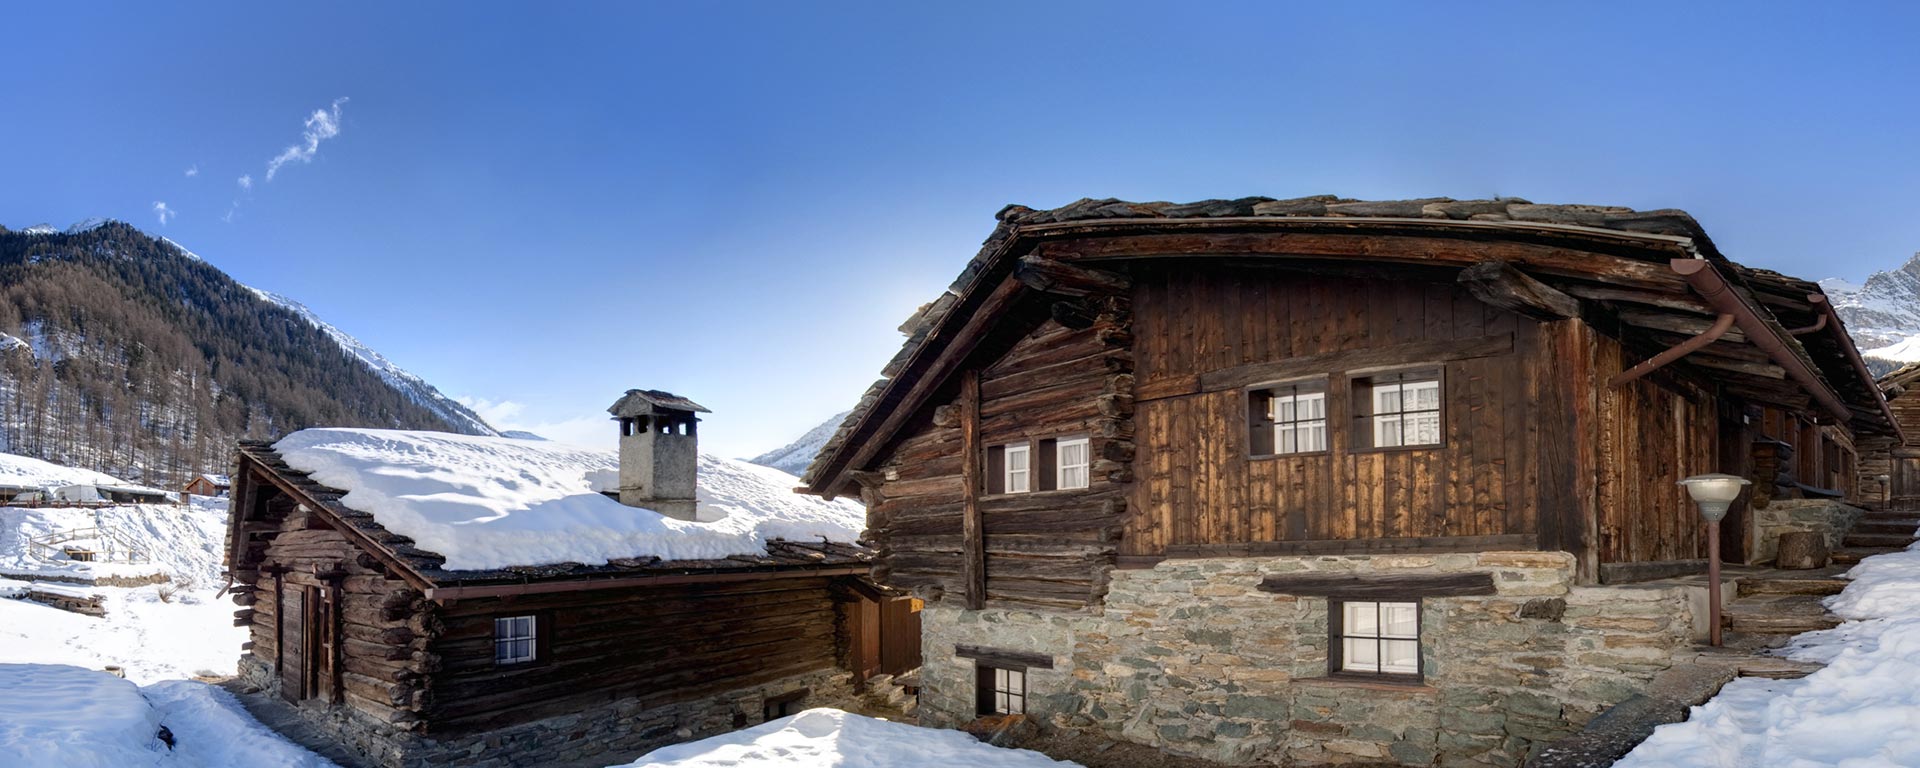 two snow covered mountain huts in the Dolomites near San Vigilio di Marebbe during a sunny winter day